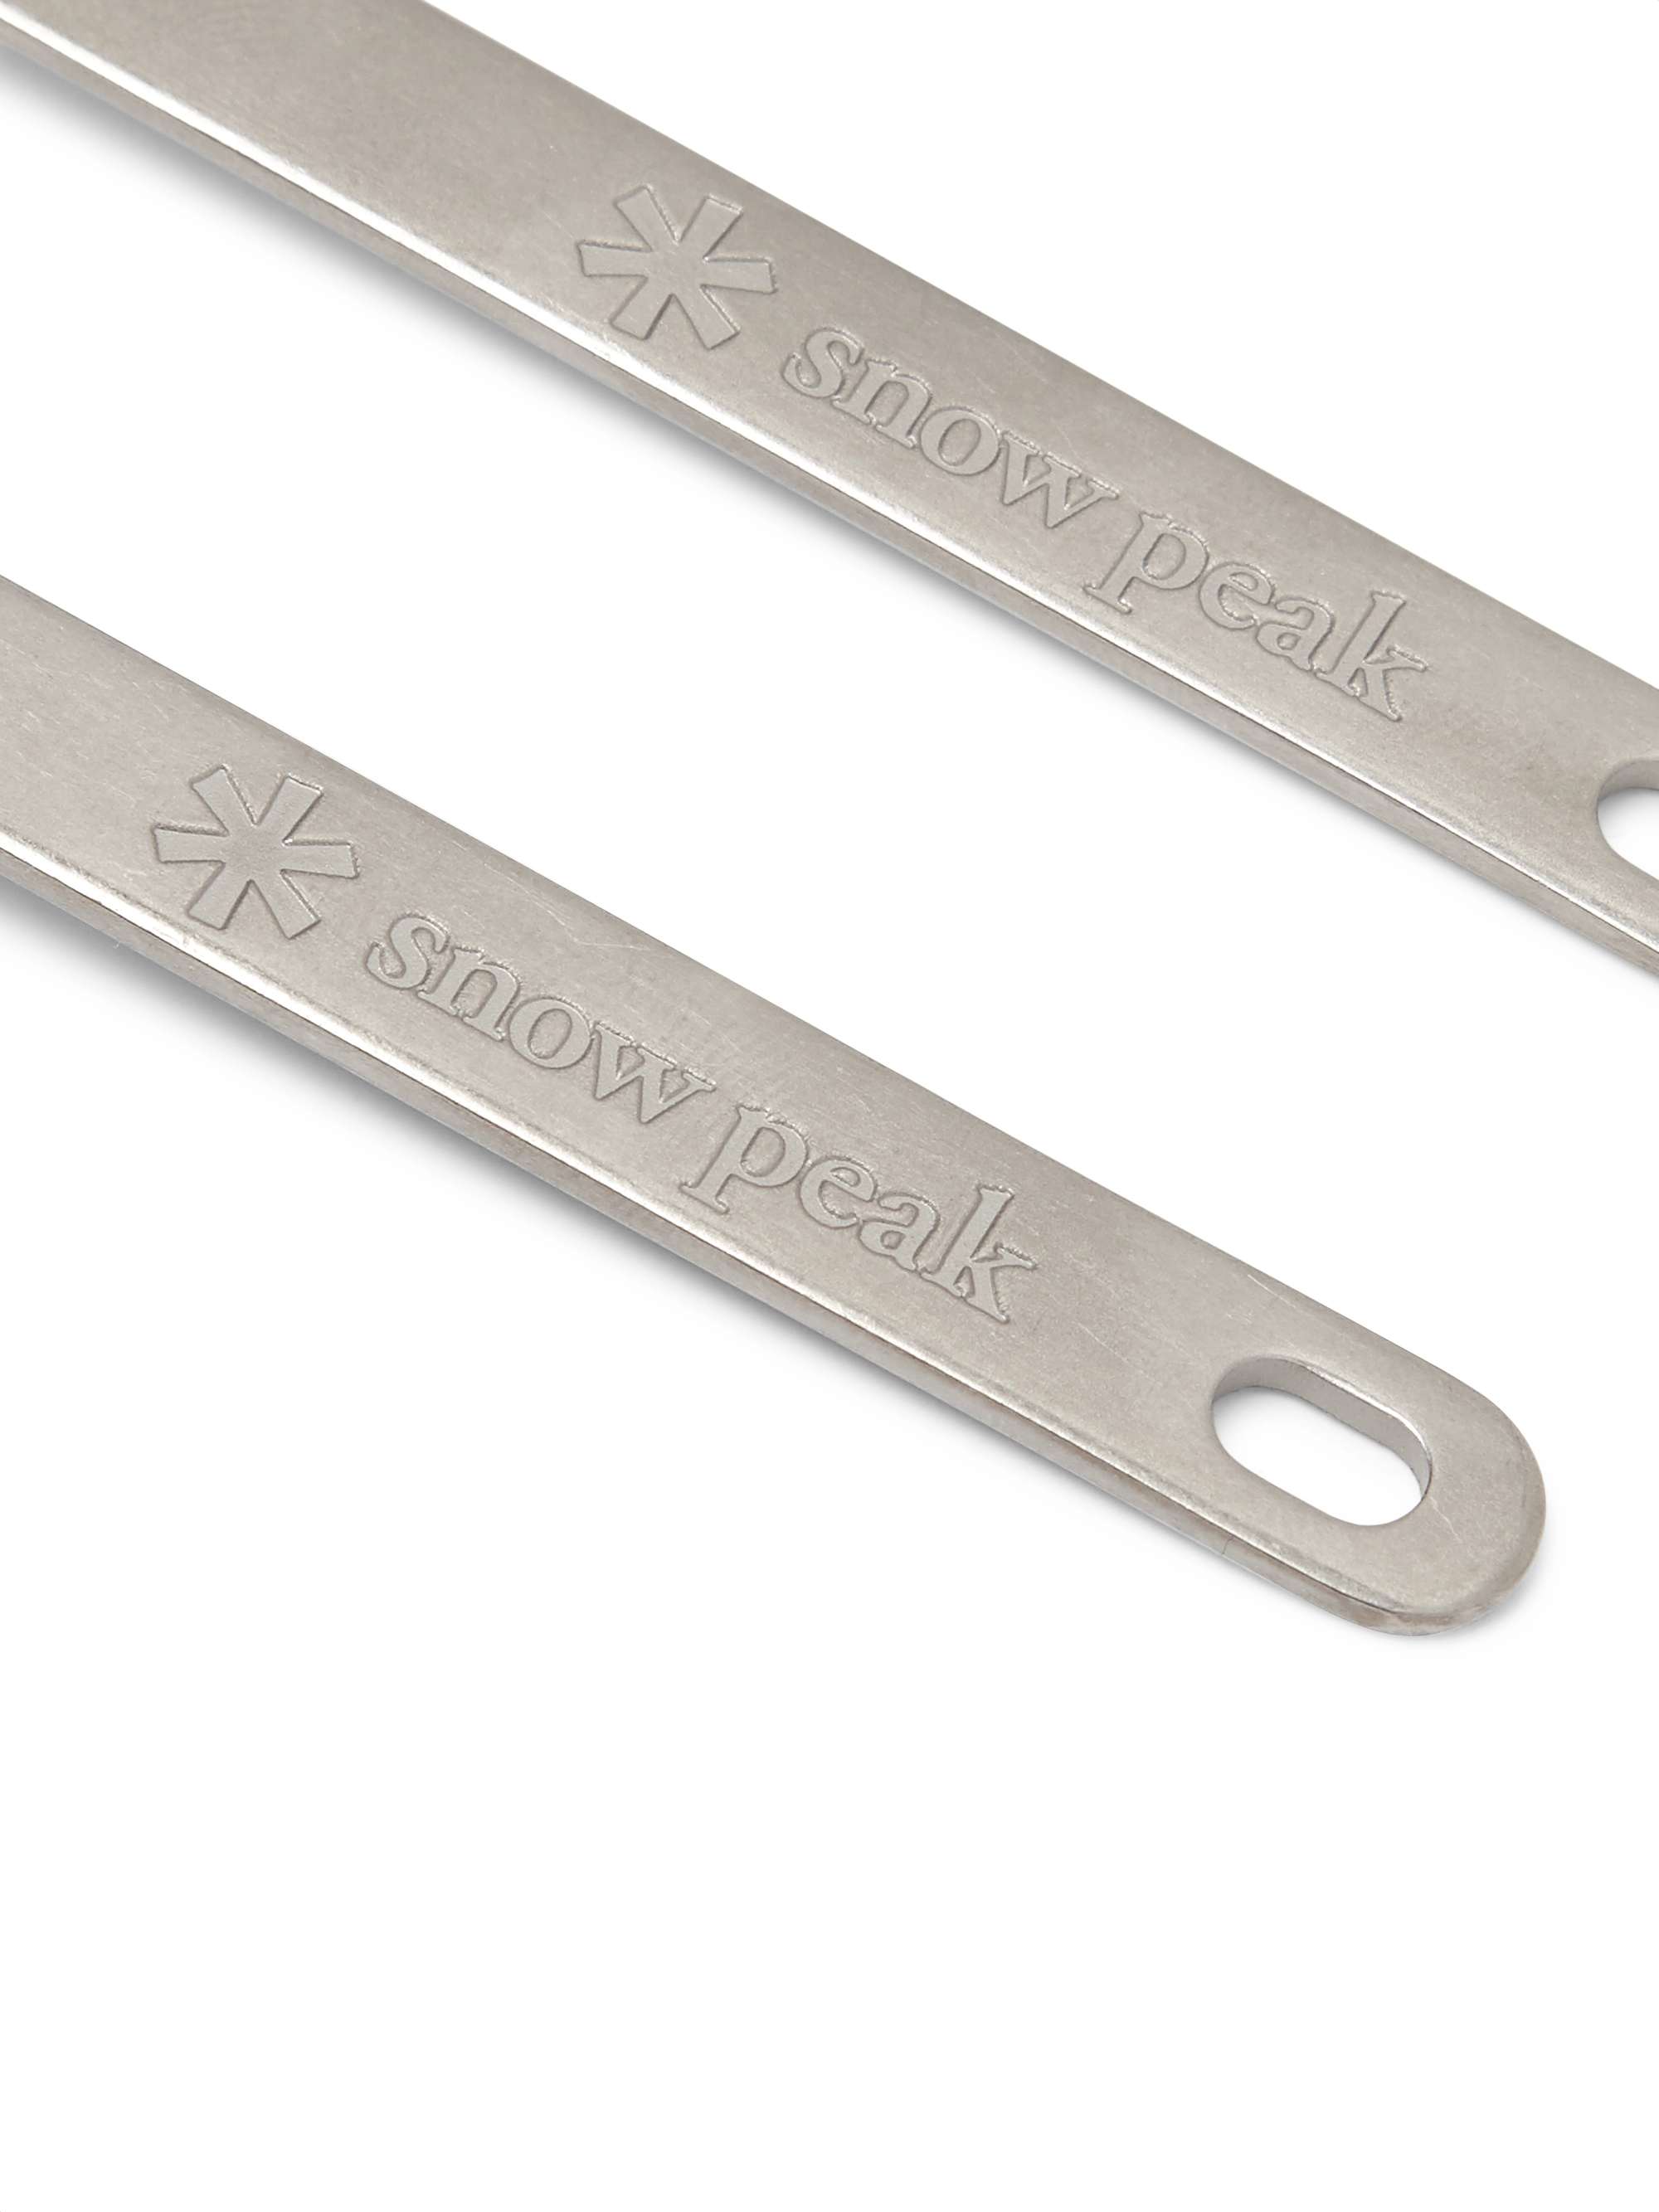 SNOW PEAK Titanium Fork and Spoon Cutlery Set for Men | MR PORTER